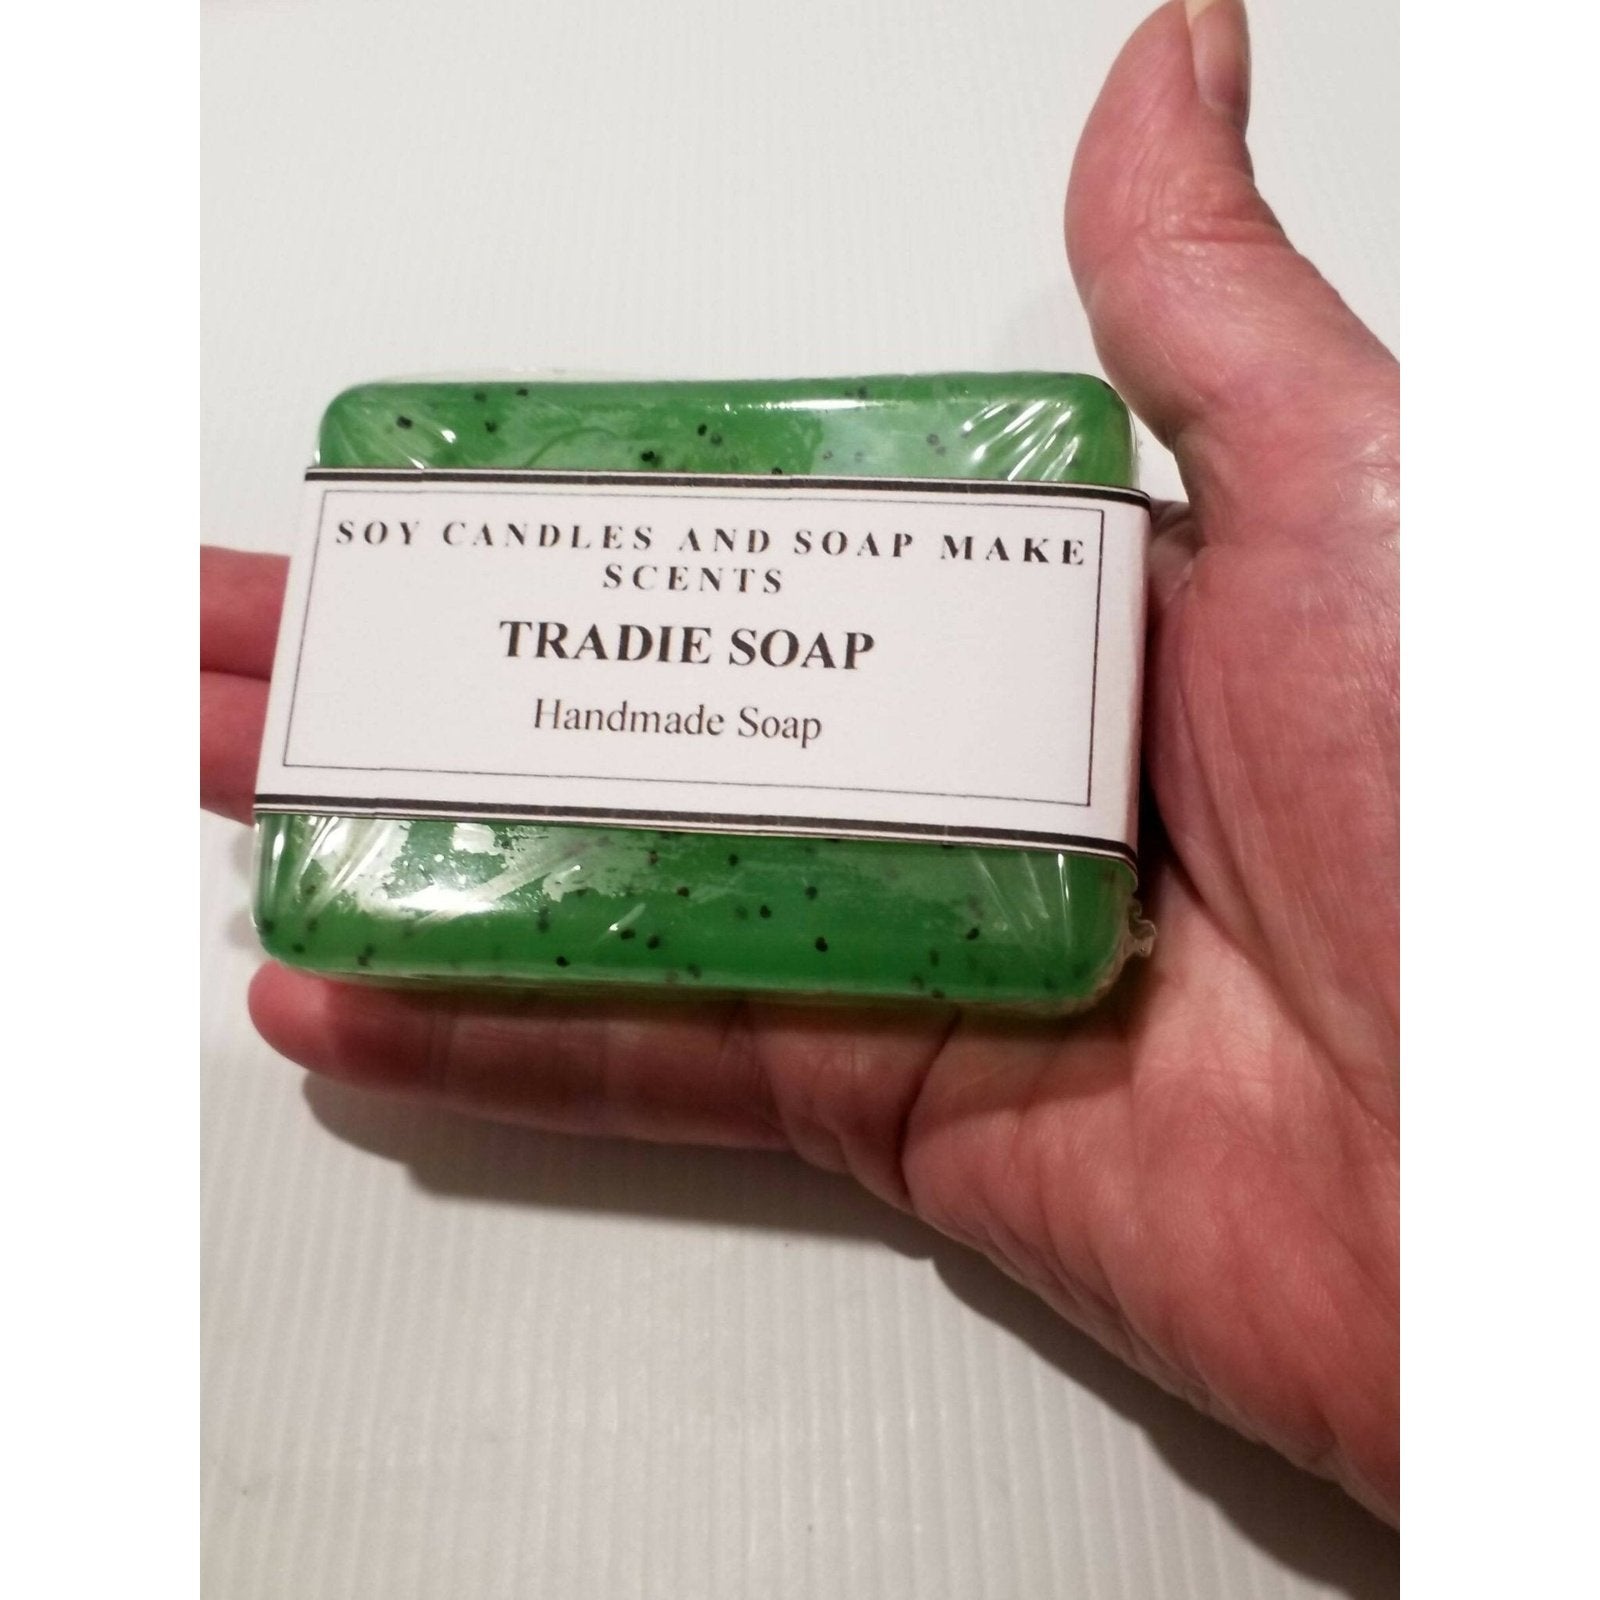 Handmade Soap - Tradie Soap - 2 x Soaps - Giftbox - No Palm Oil - Vegan Friendly - Free Shipping - AMD Touring